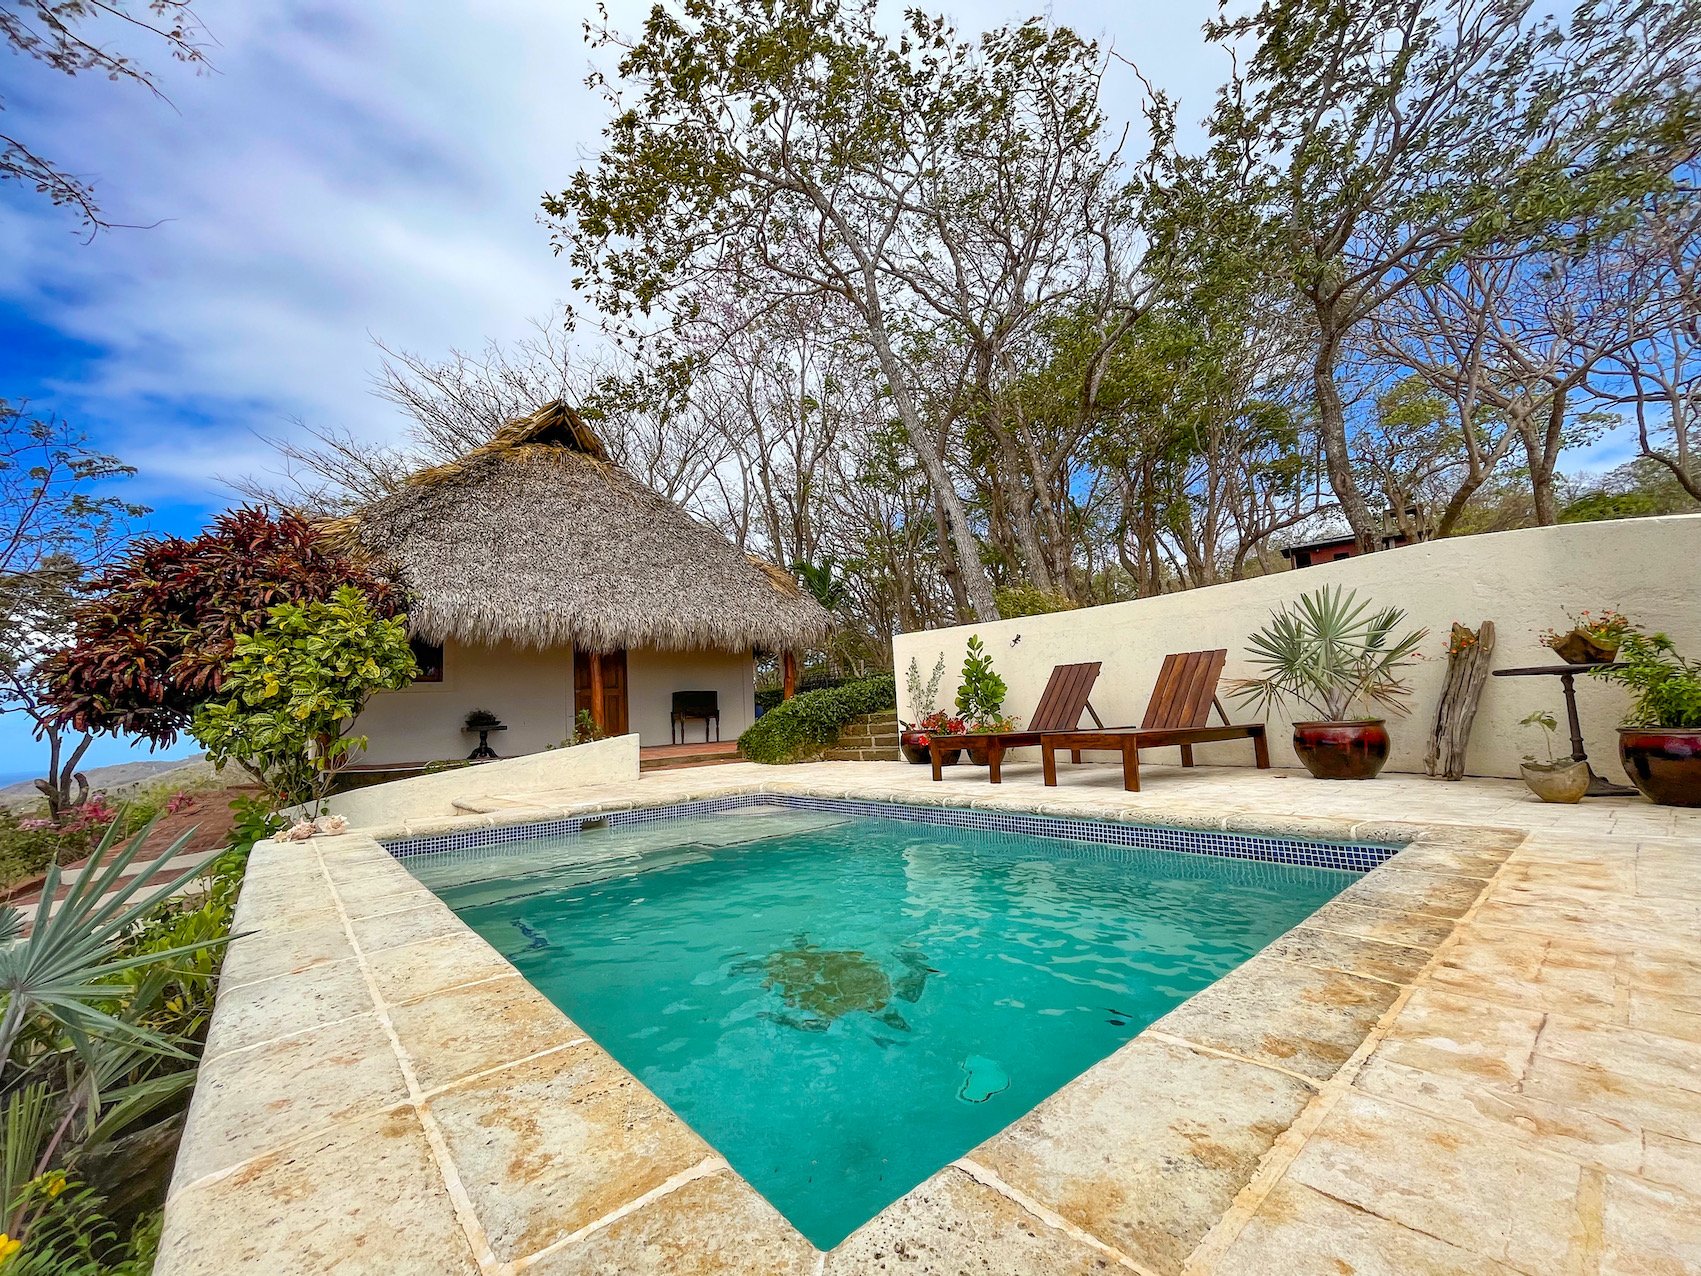 San Juan Del Sur Nicaragua Property Real Estate Acreage For Sale 16.JPEG